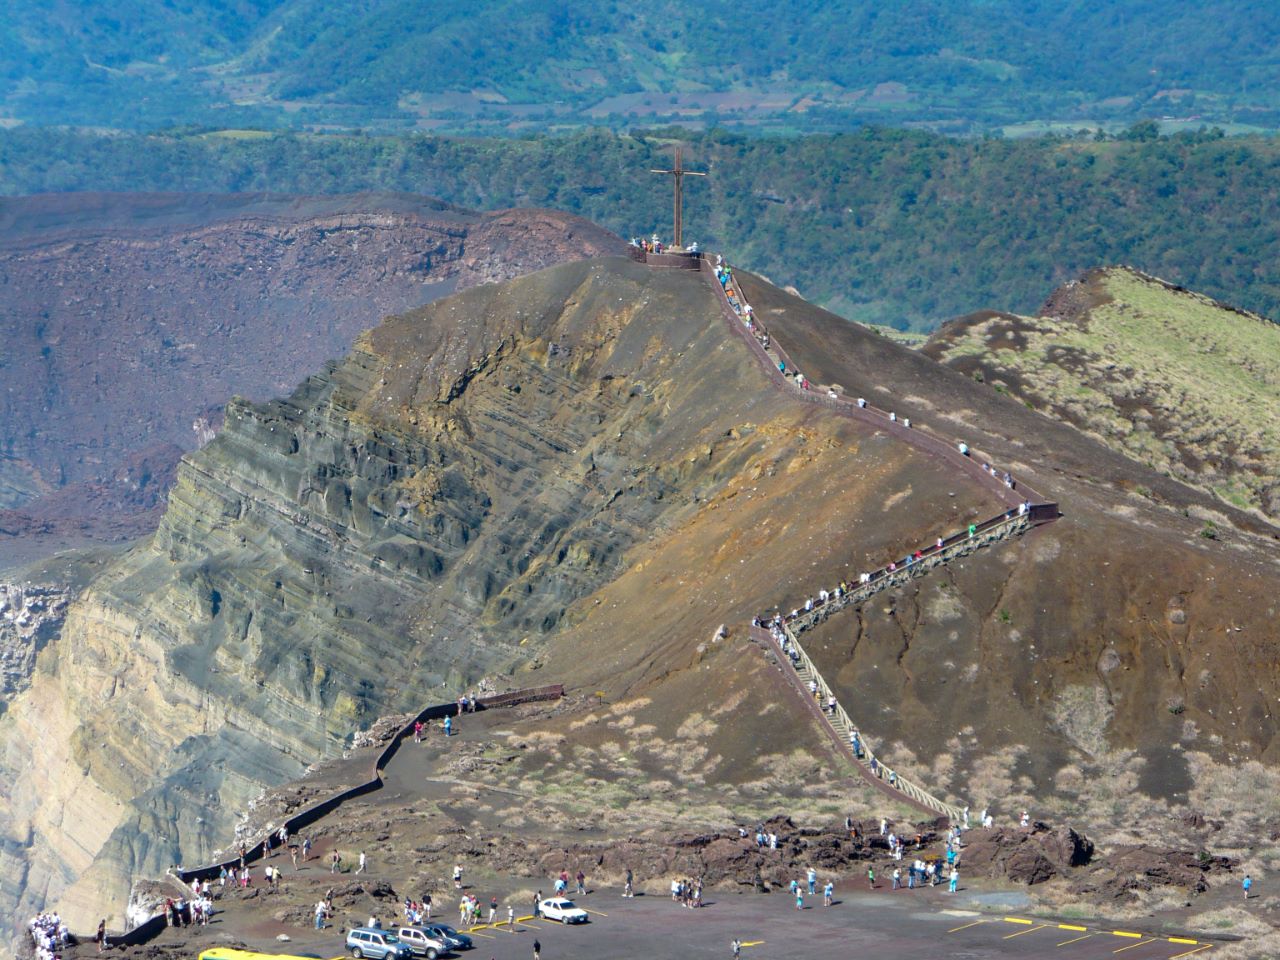 Big volcano in San Juan Del Sur, Nicaragua